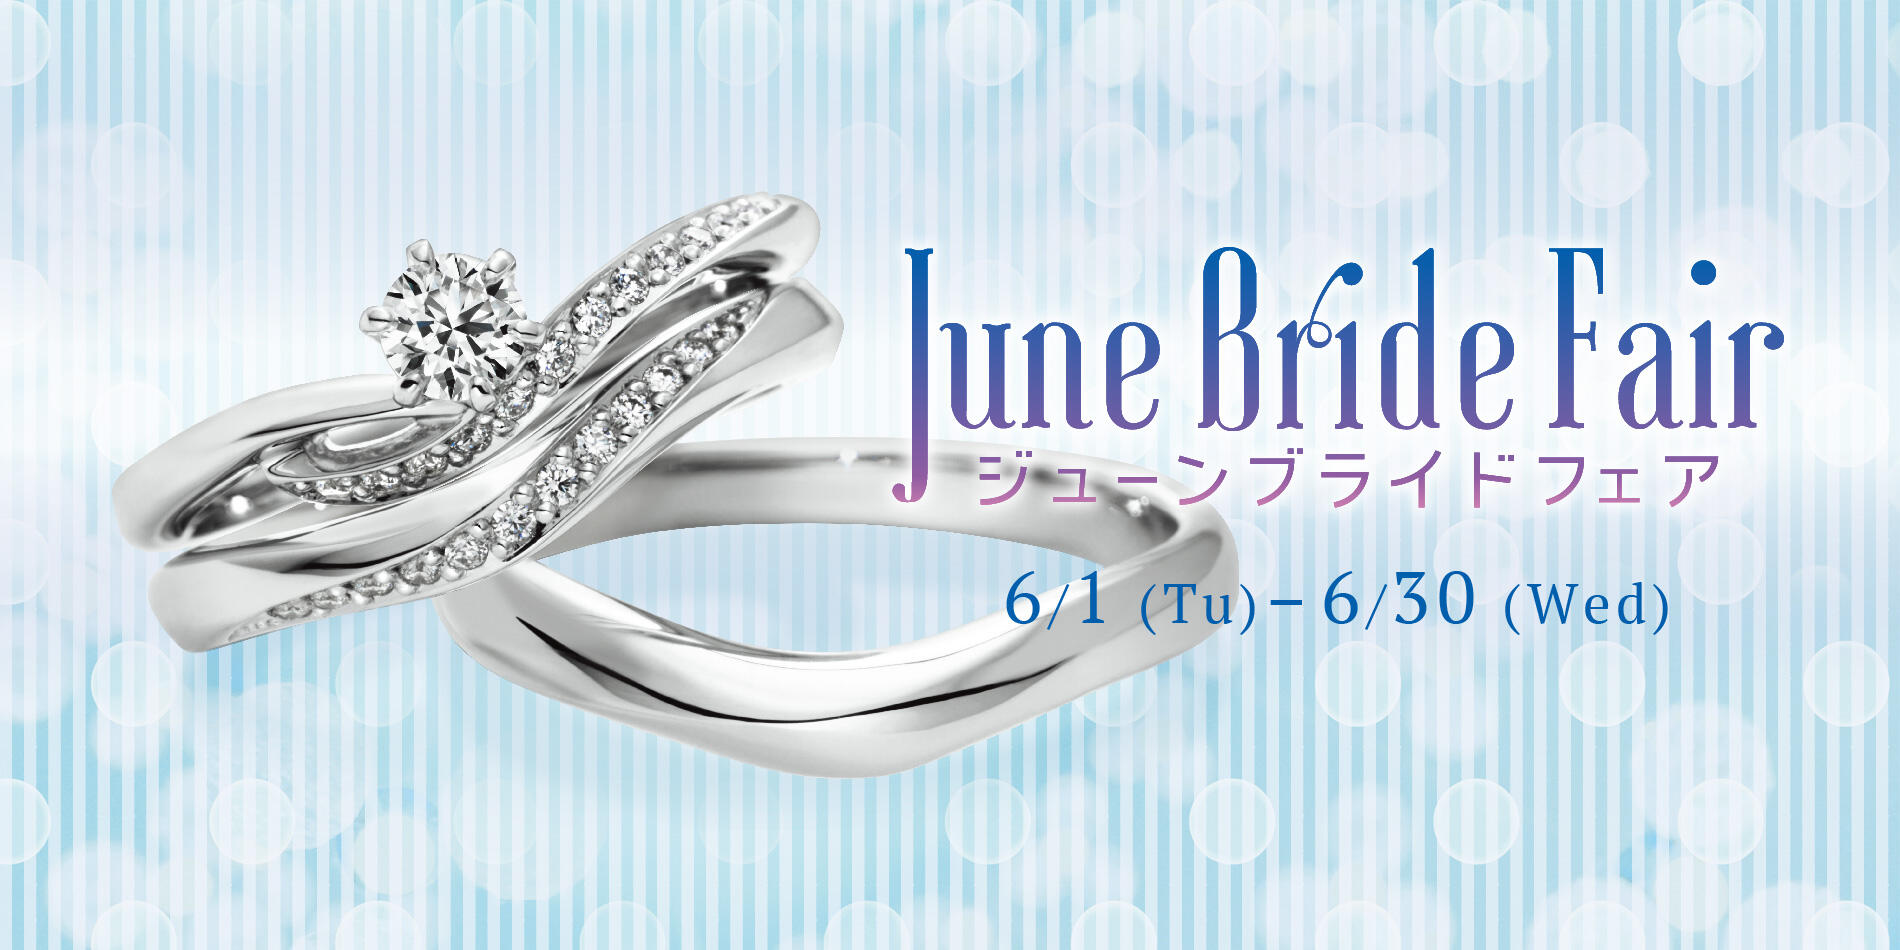 「June Bride Fair」開催